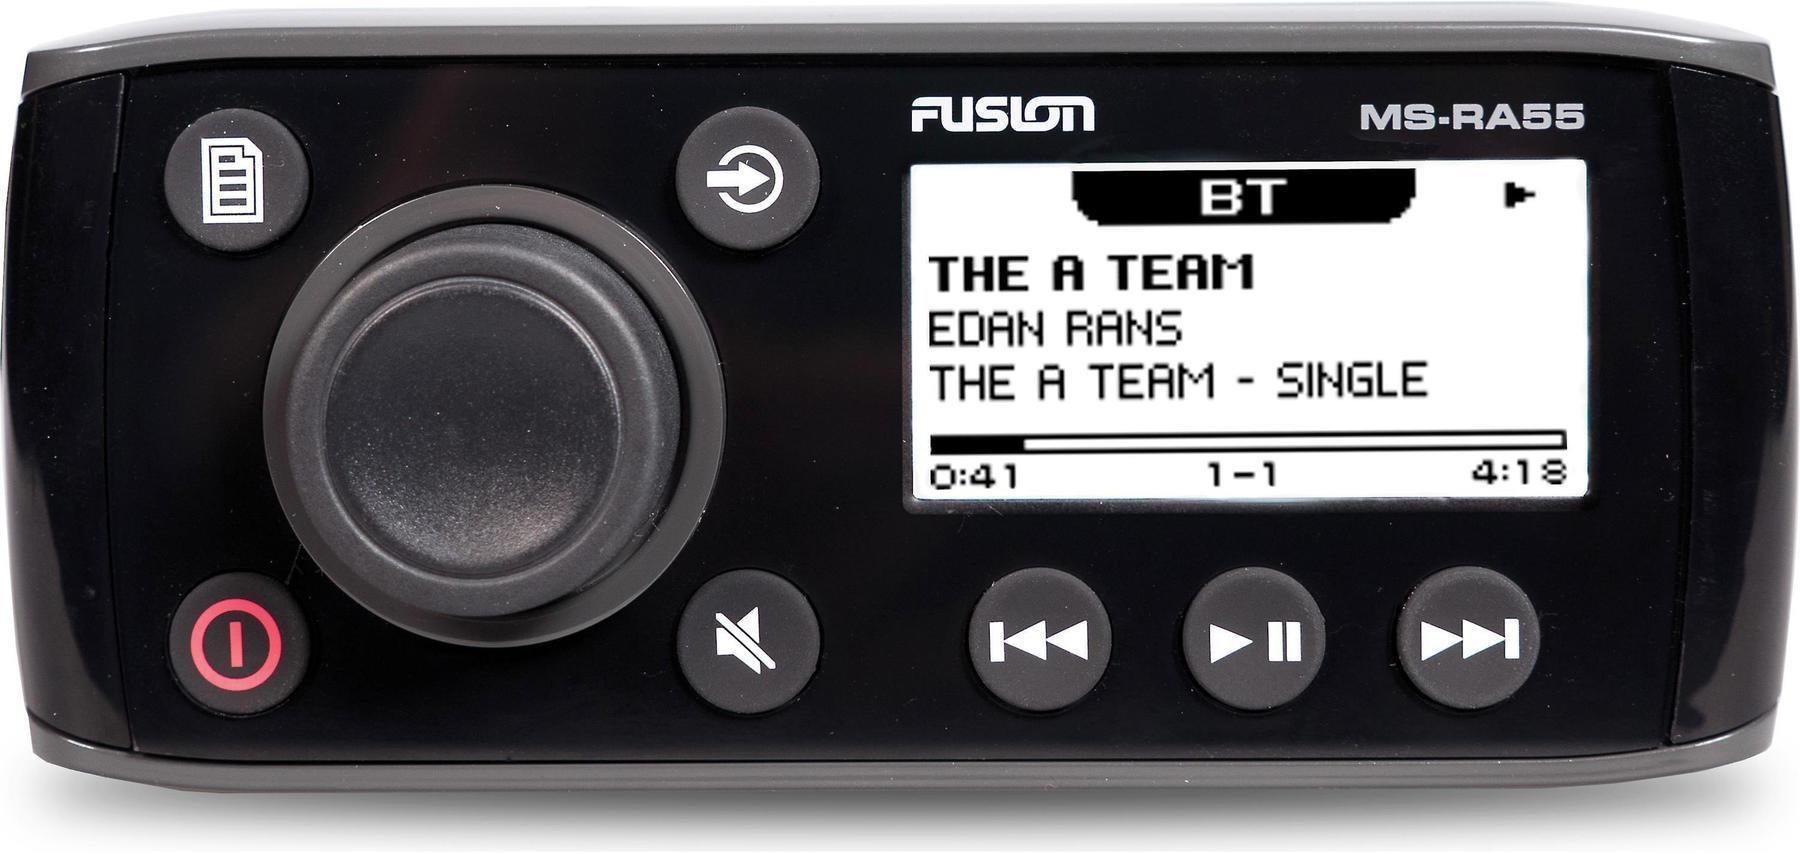 Marine Audio, Marine TV Fusion MS-RA55 - AM/FM Radio with Bluetooth modul